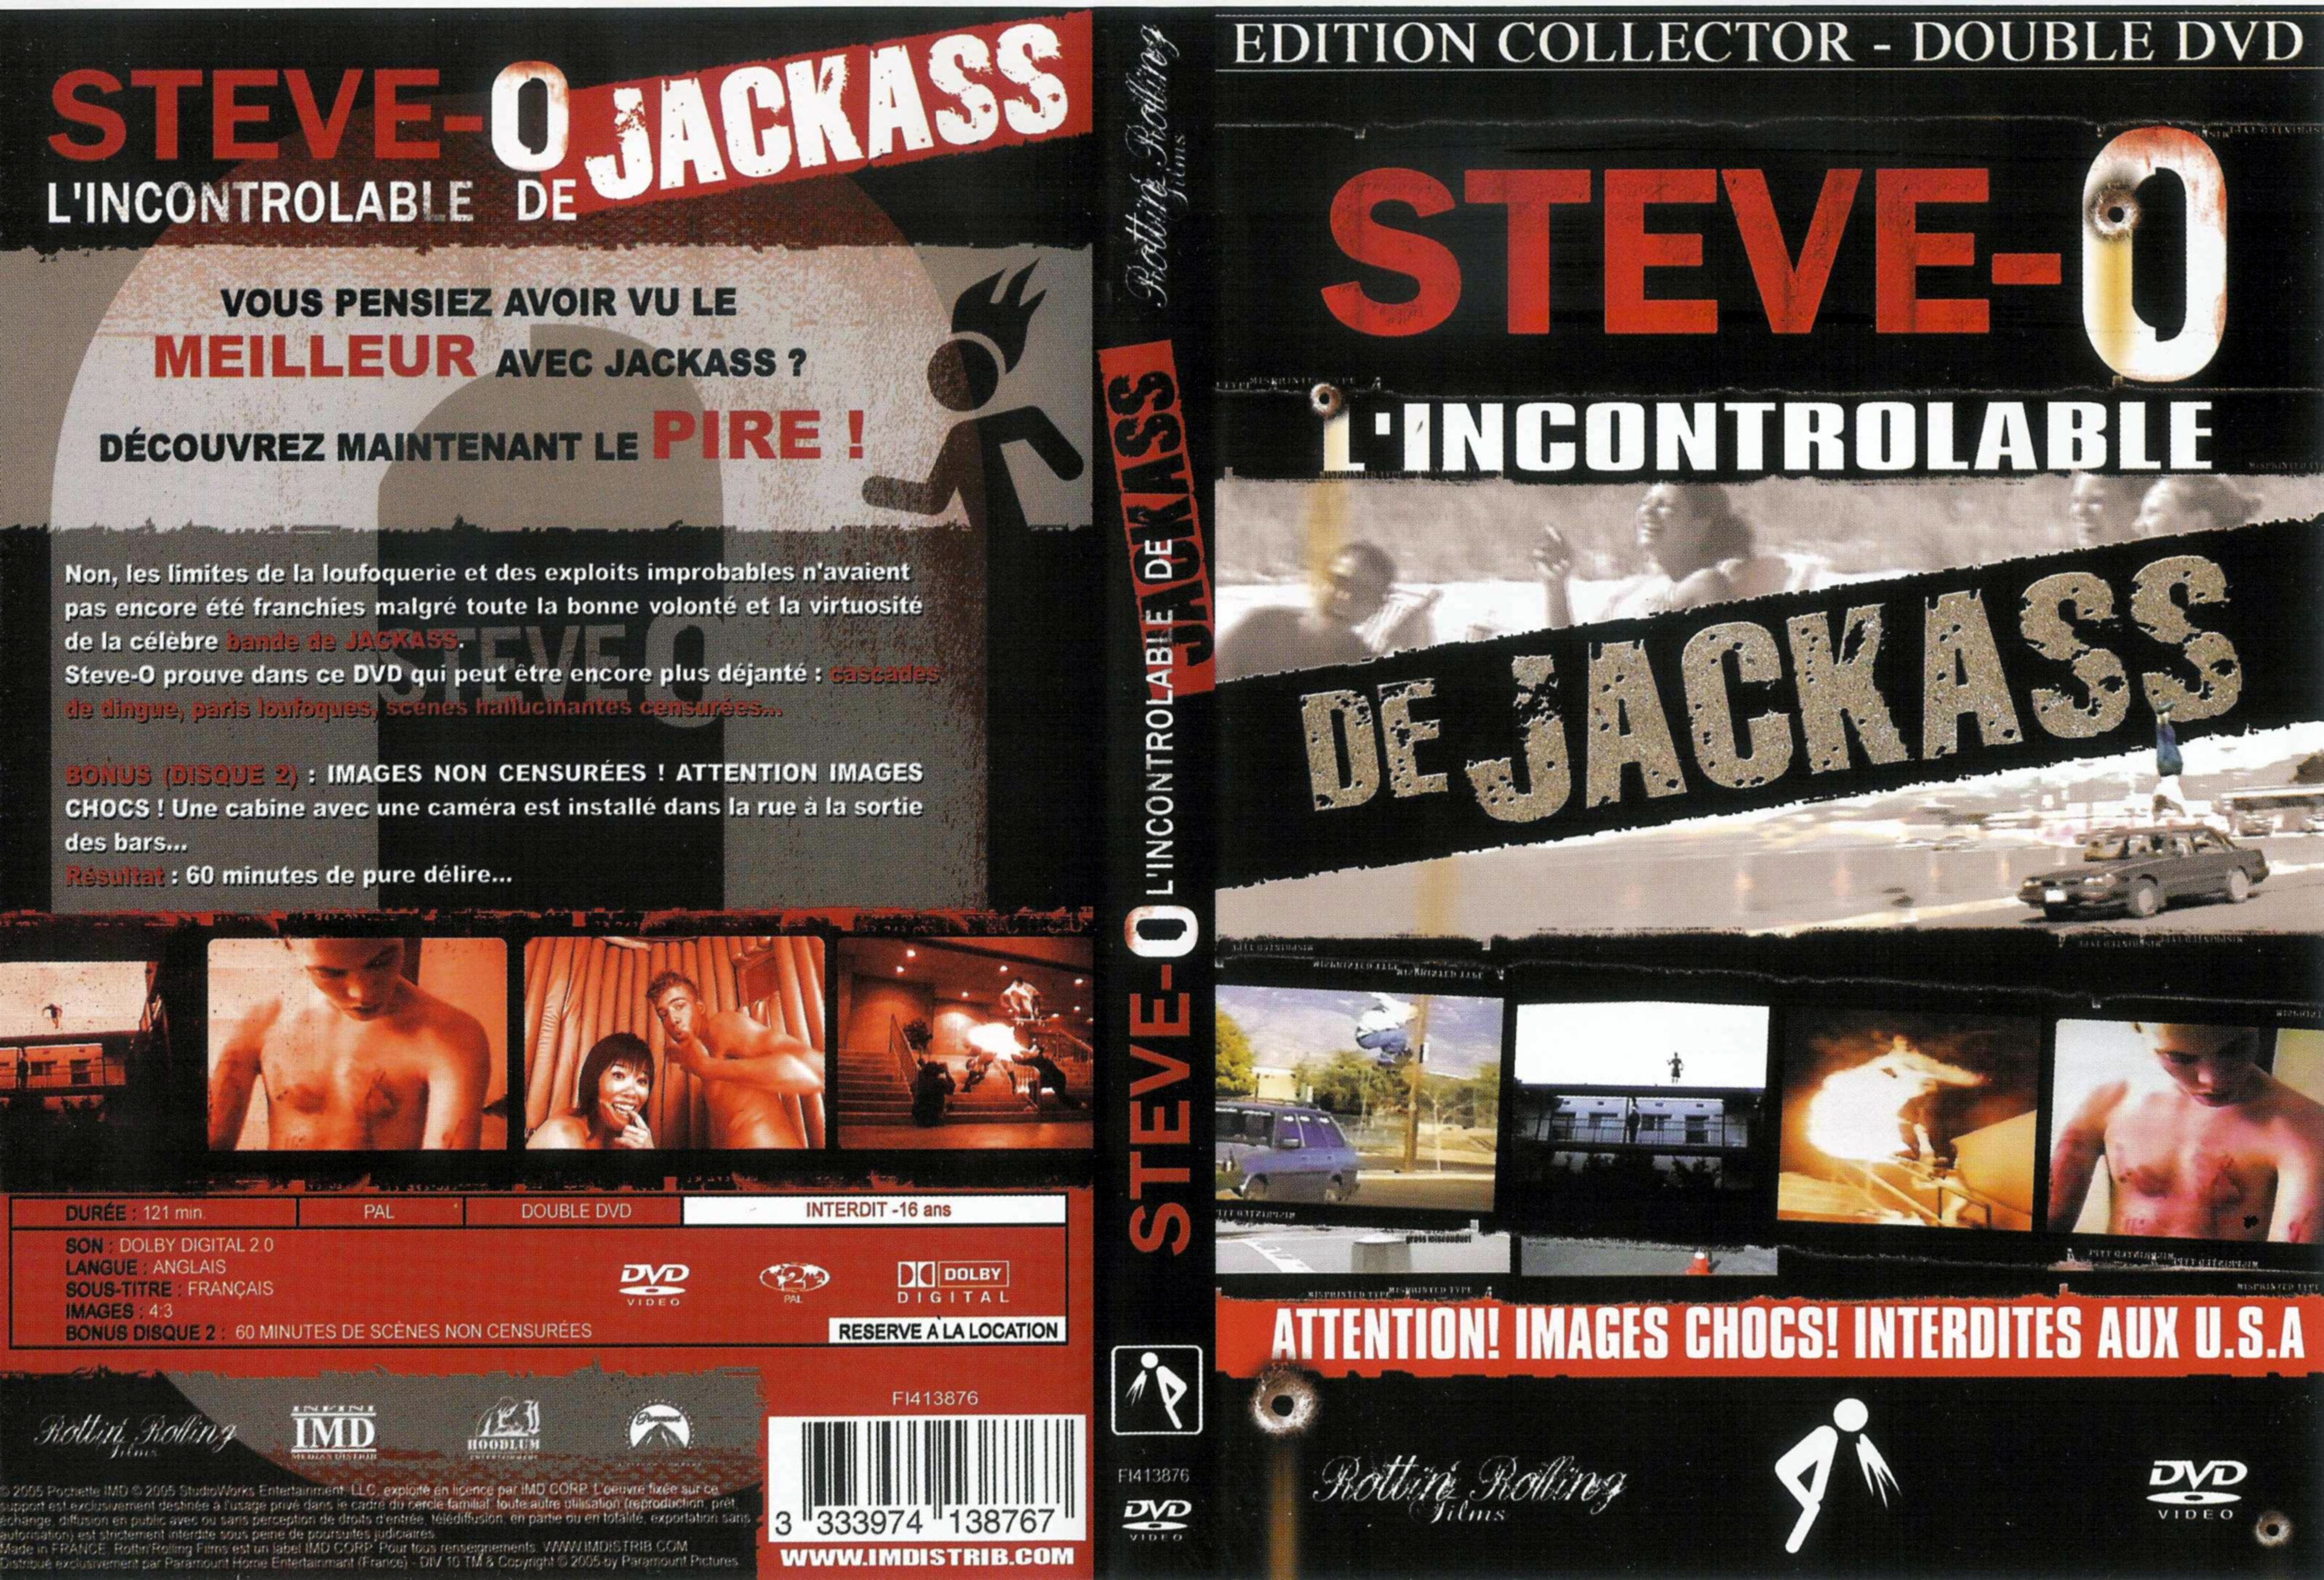 Jaquette DVD Steve-O l